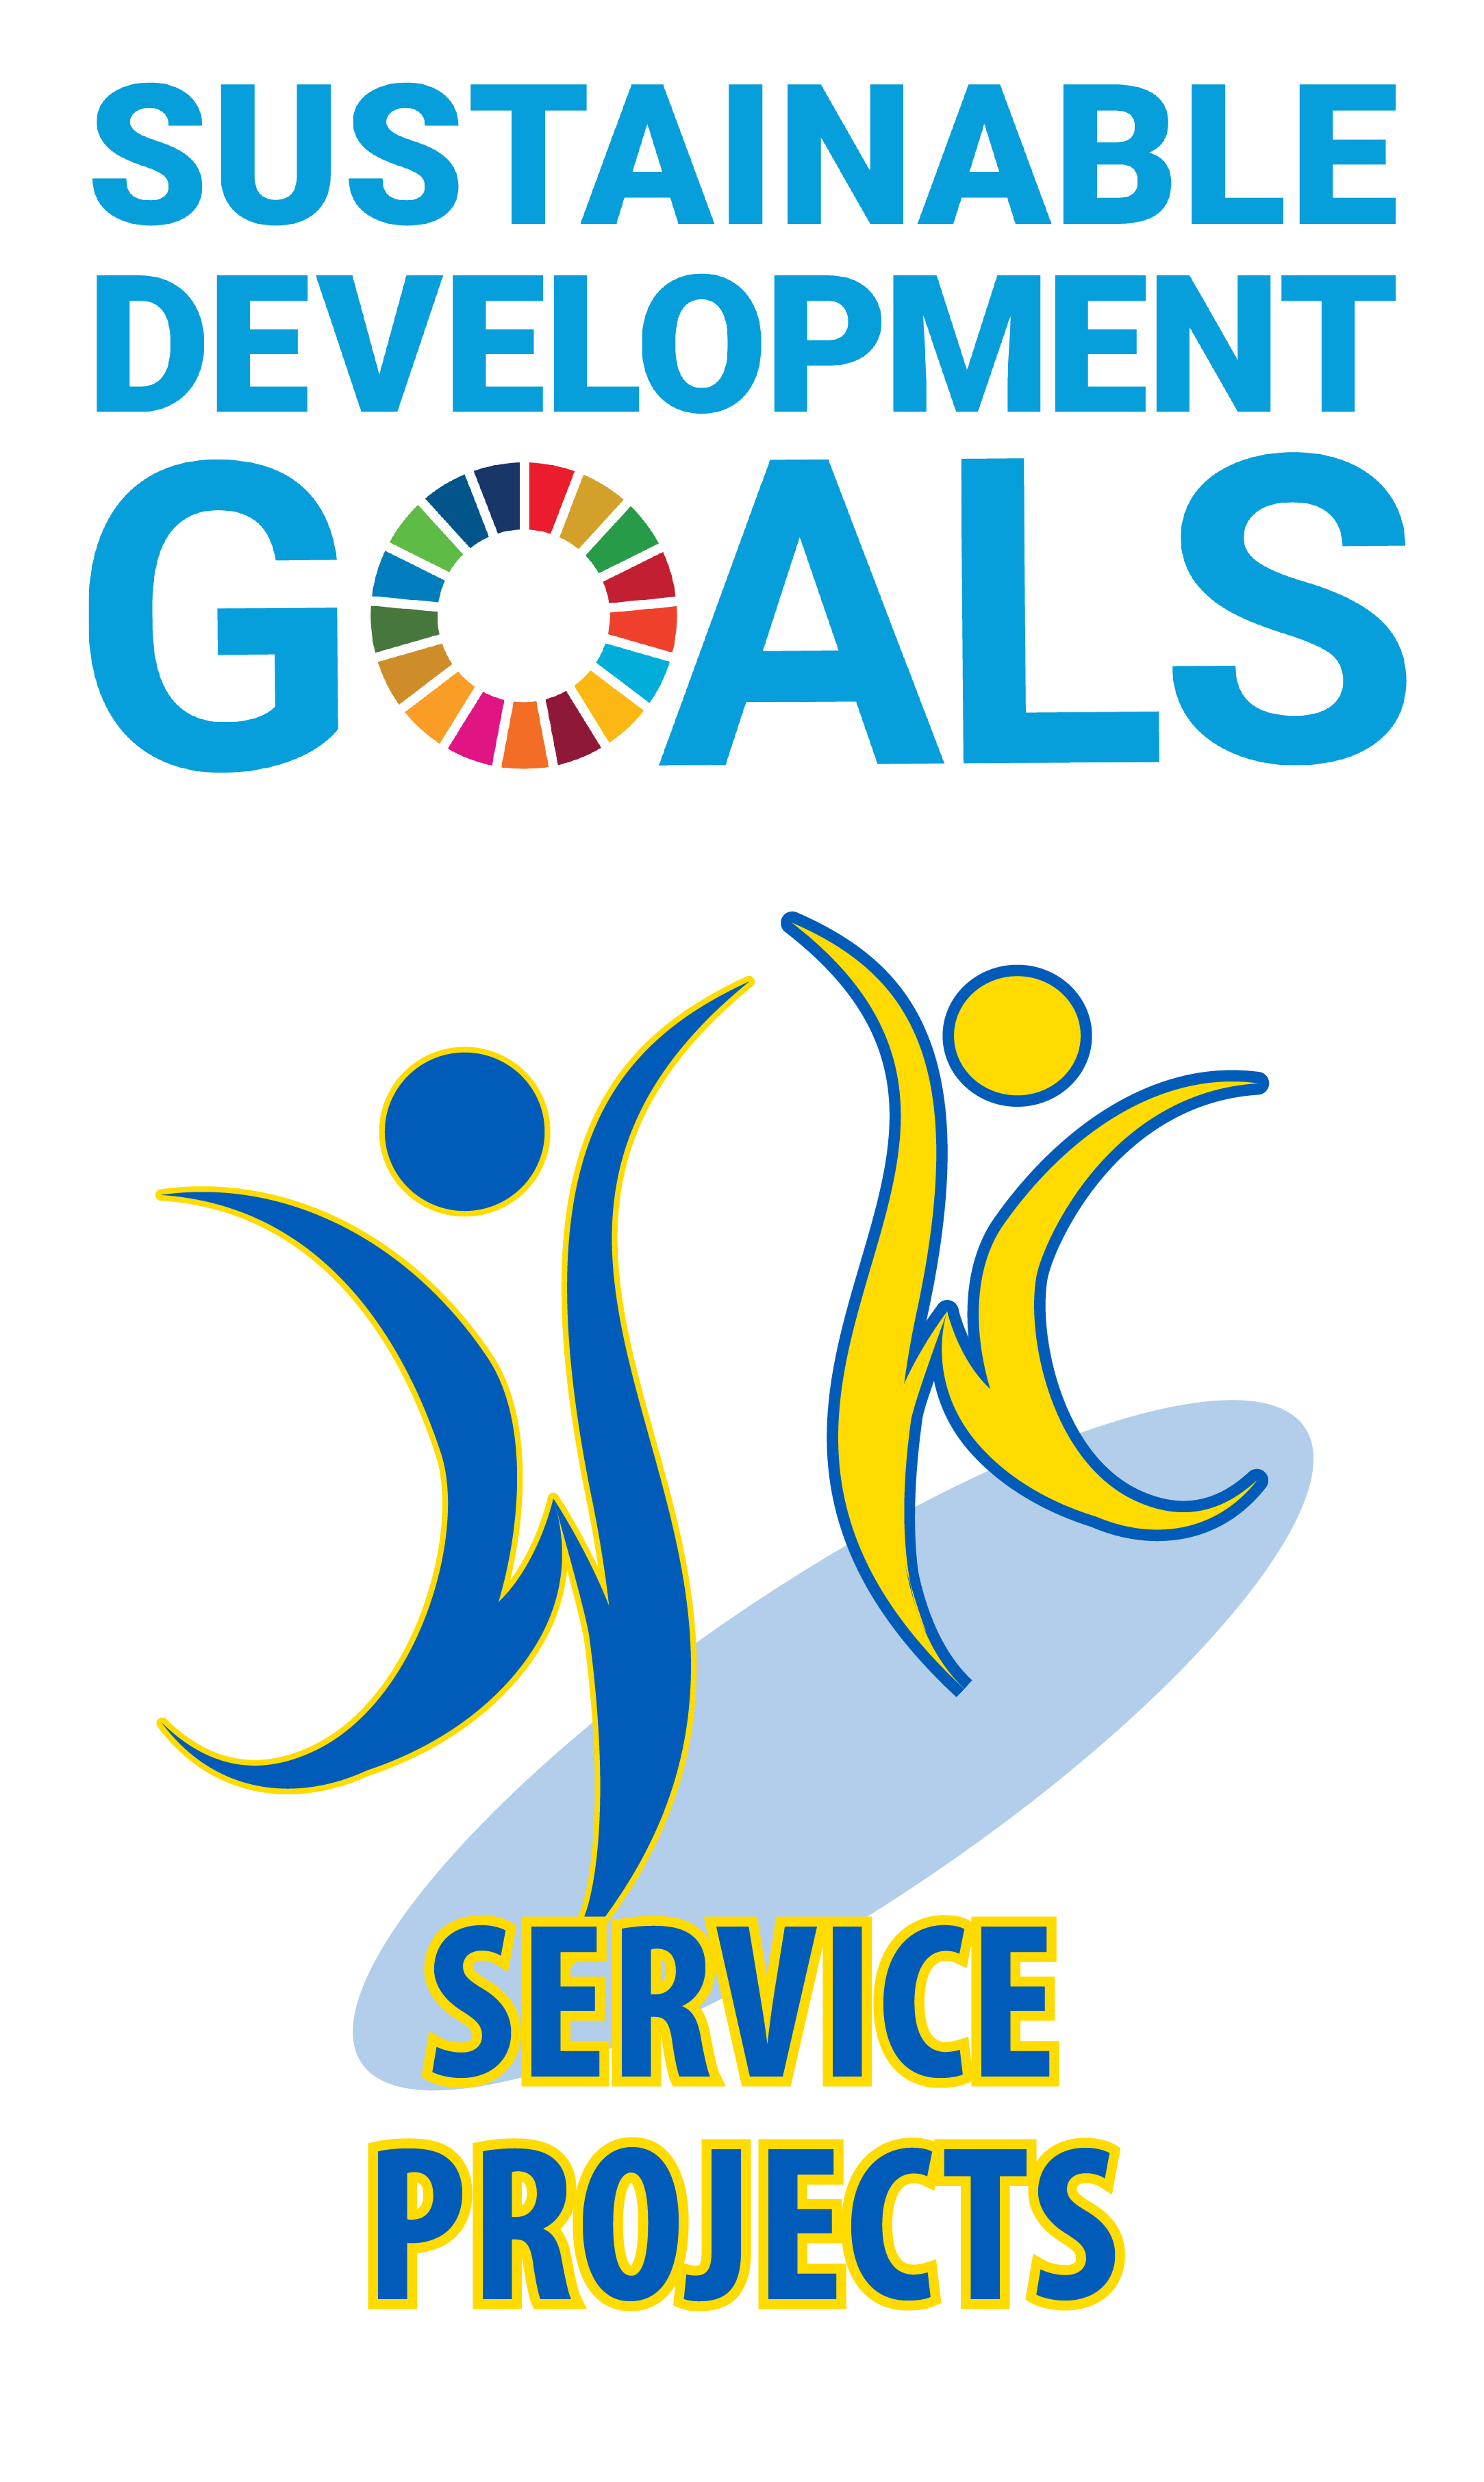 #4 Goal 2022-23: Strong Women Stronger World towards UN SDG